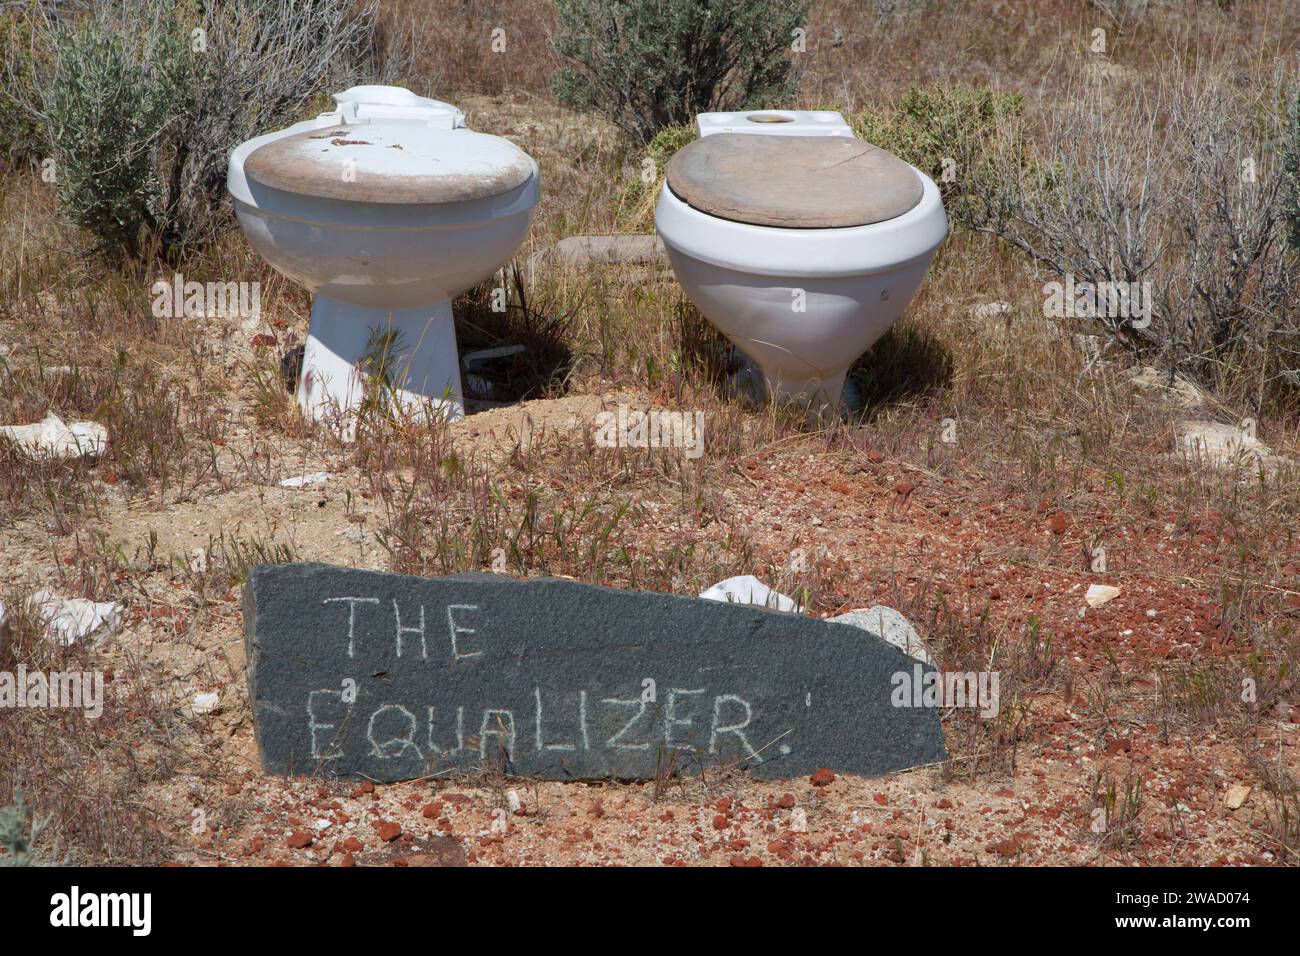 The Equalizer sculpture, Guru Road, Gerlach, Nevada Stock Photo